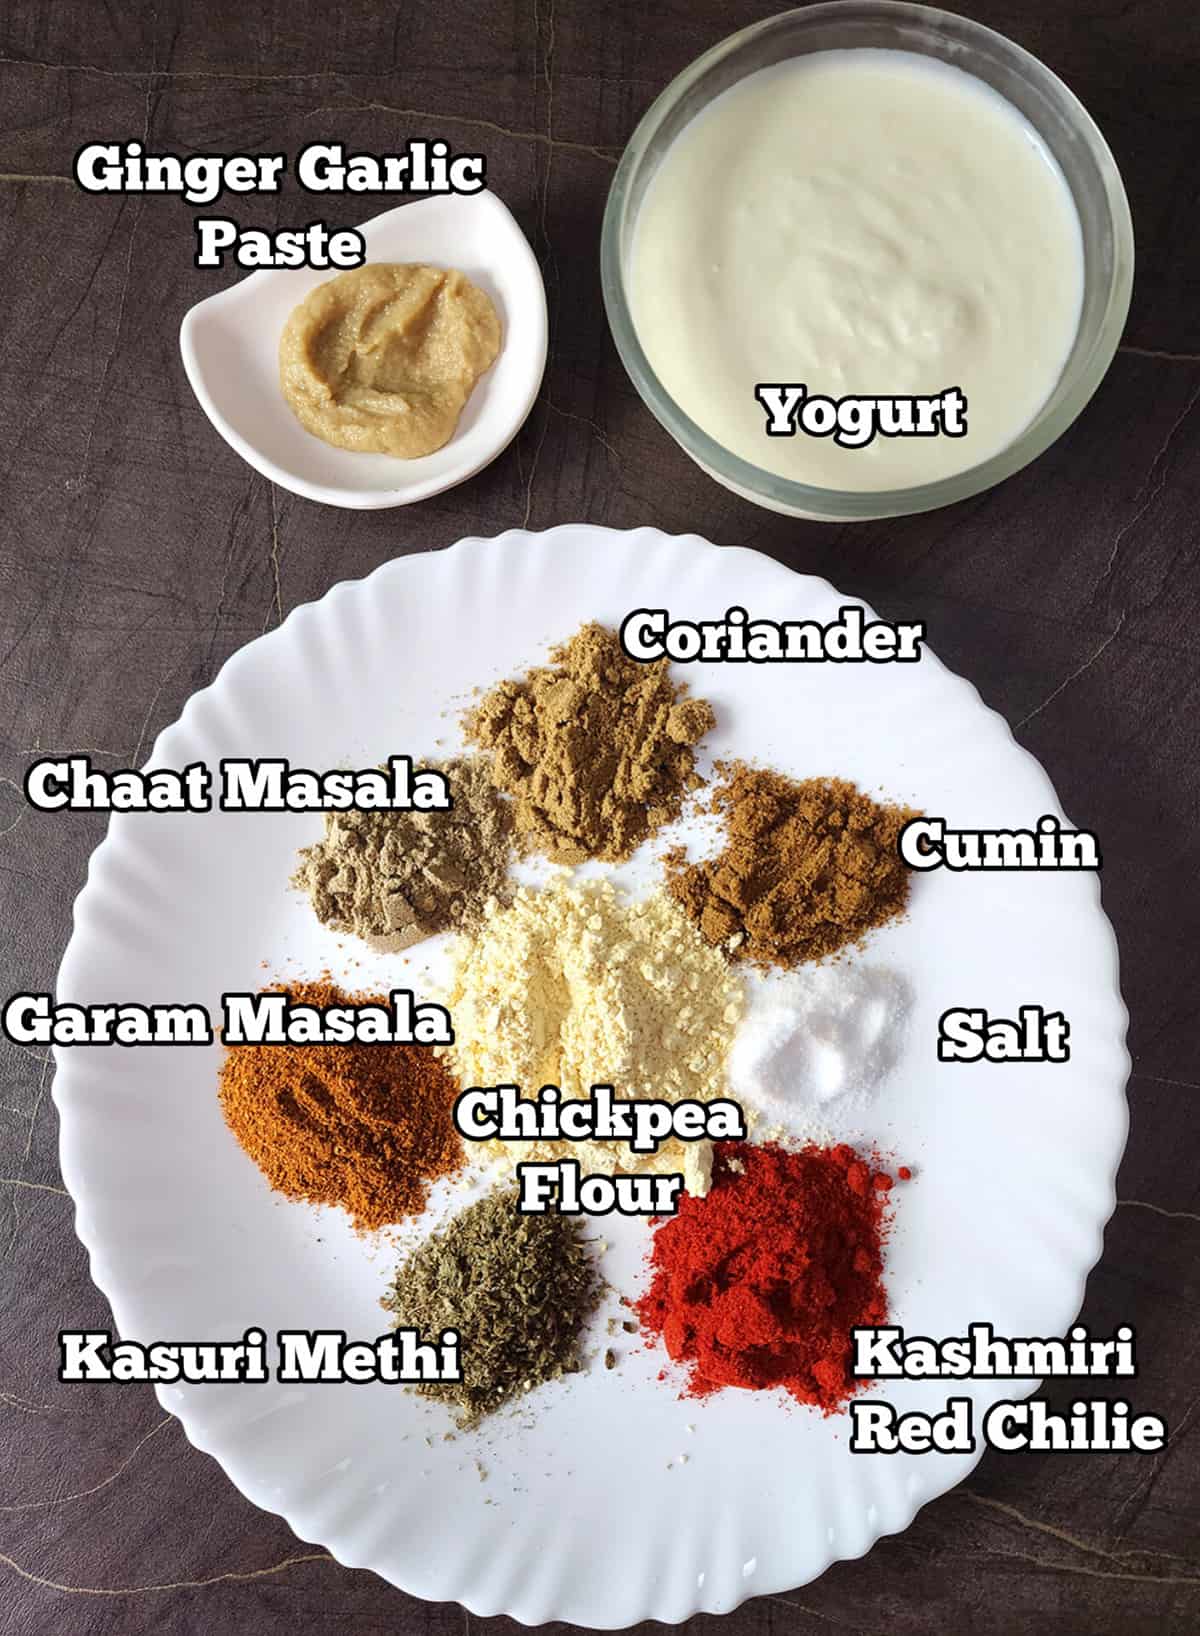 Ingredients used for paneer tikka marination.